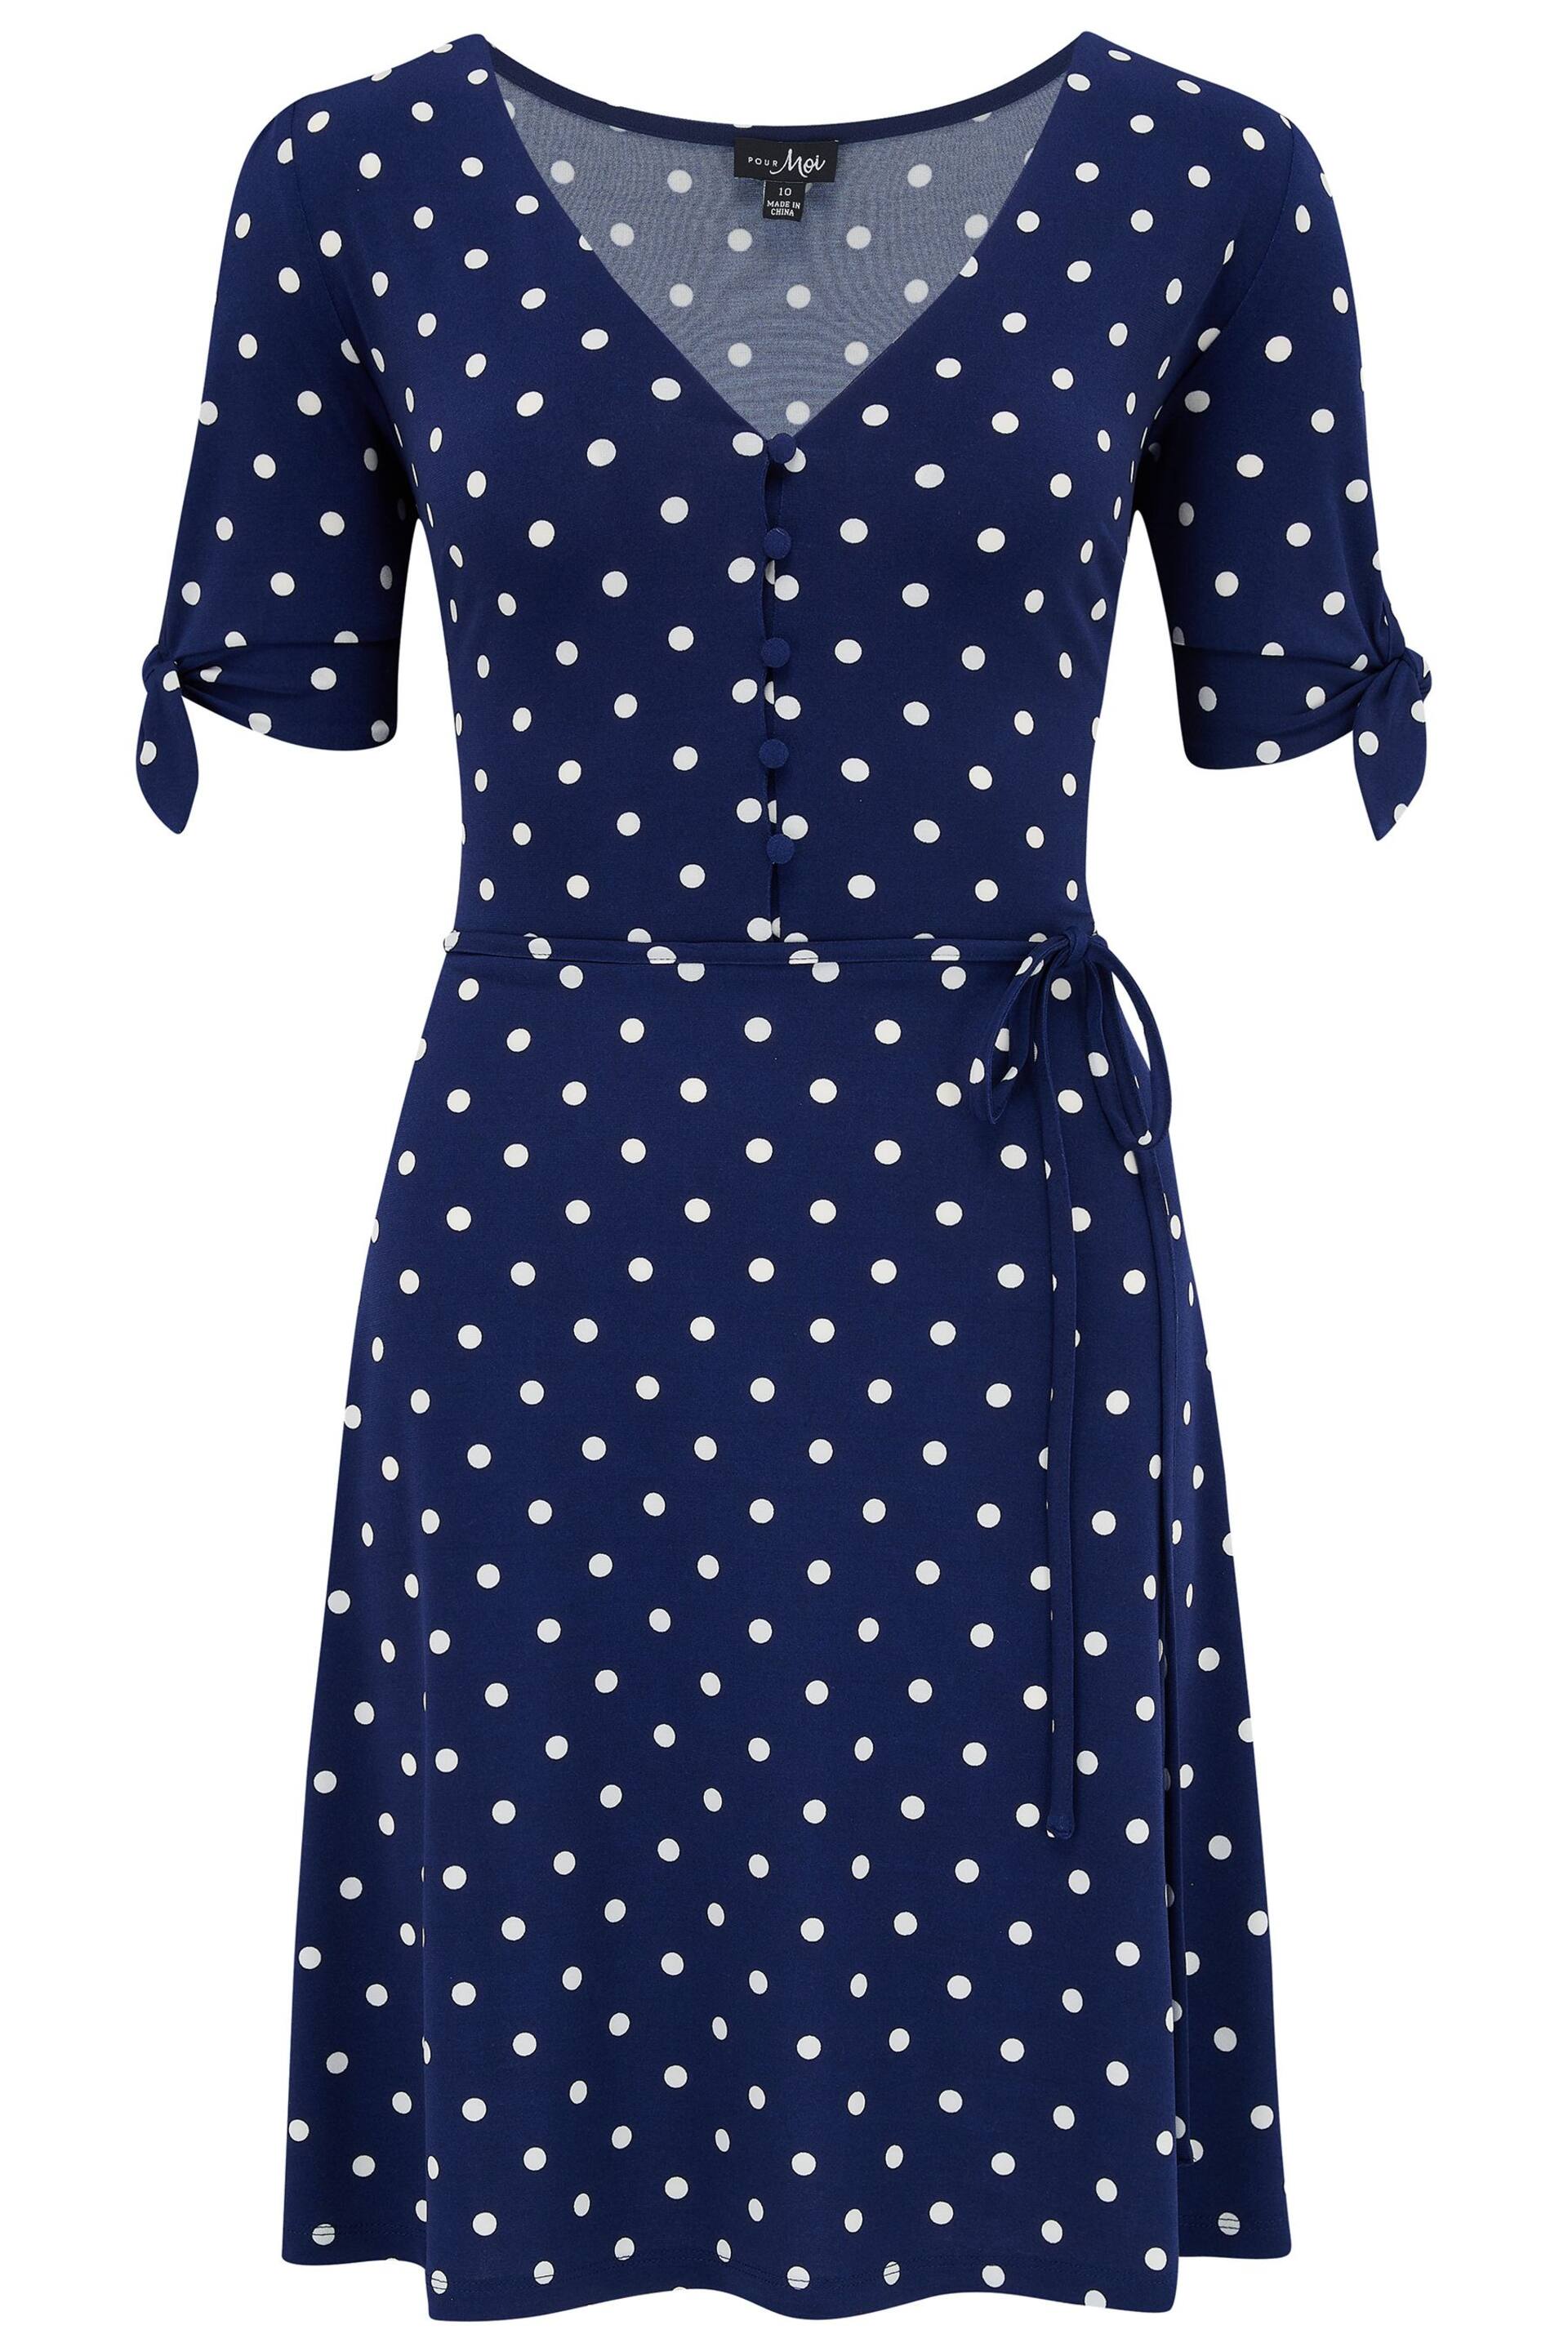 Pour Moi Navy Blue Polka Dot Bella Fuller Bust Slinky Stretch Tie Sleeve Mini Dress - Image 4 of 5